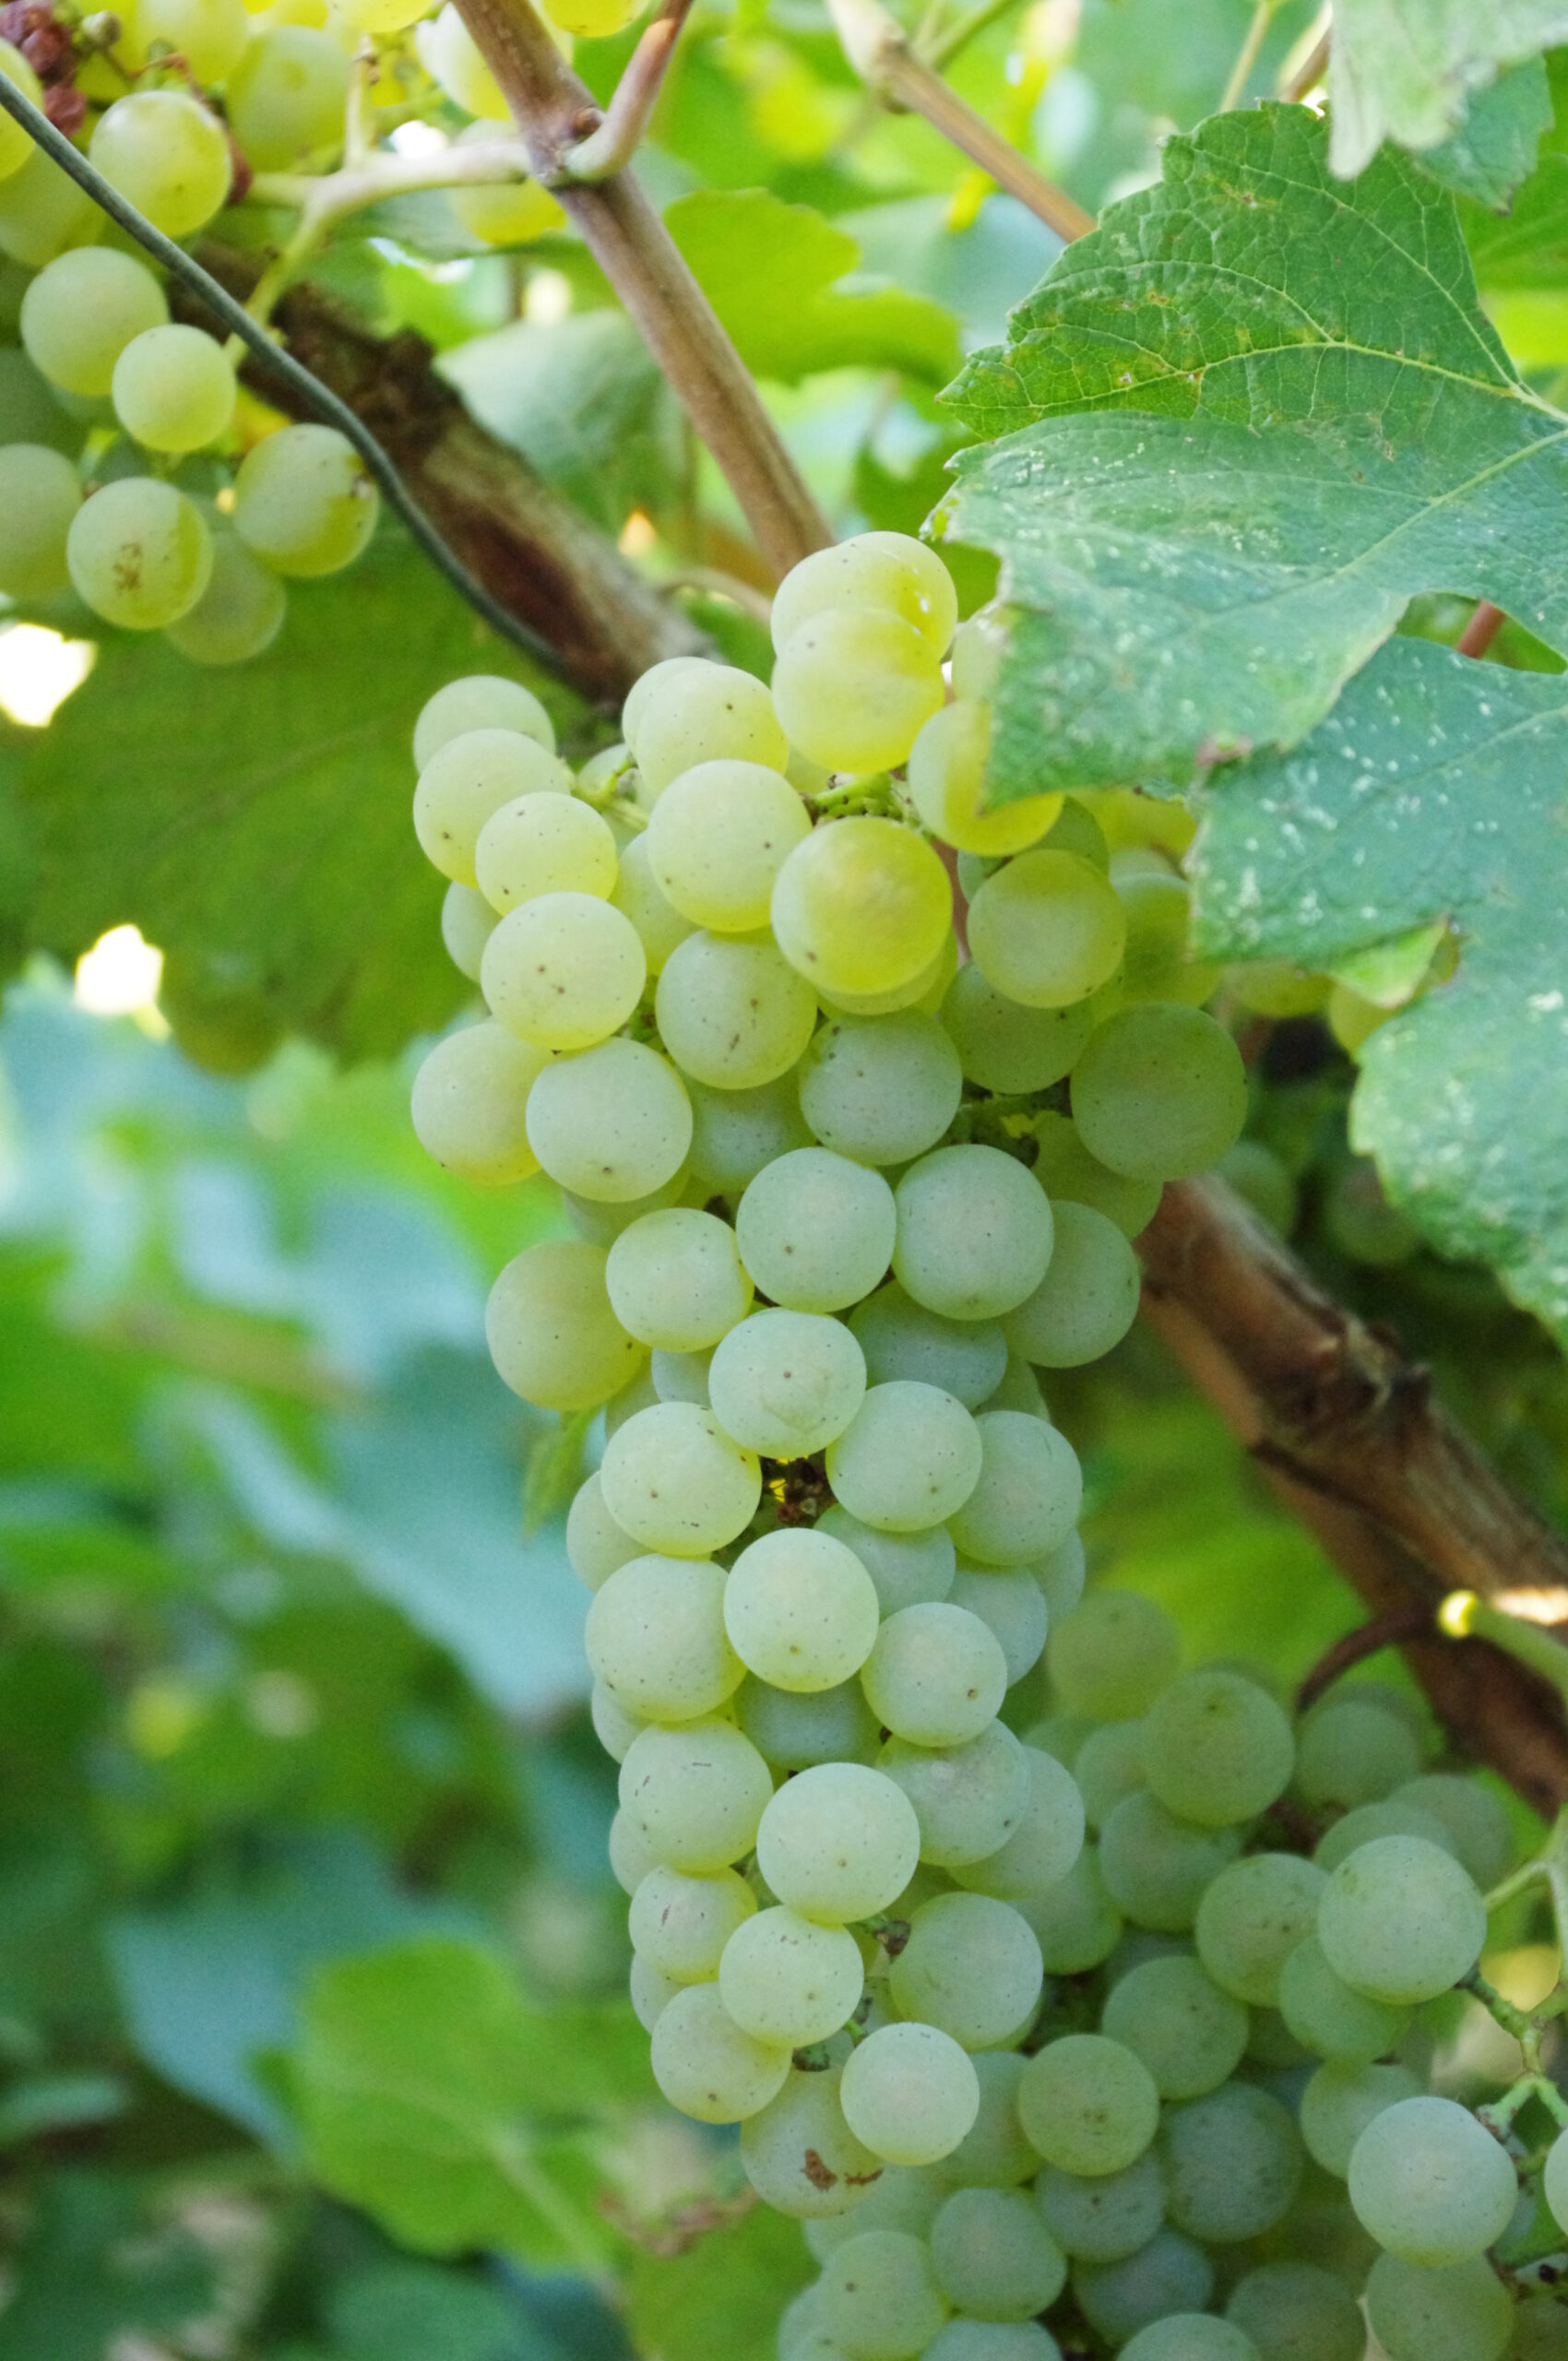 chardonnay vs sauvignon blanc vs pinot grigio: chardonnay grapes are green